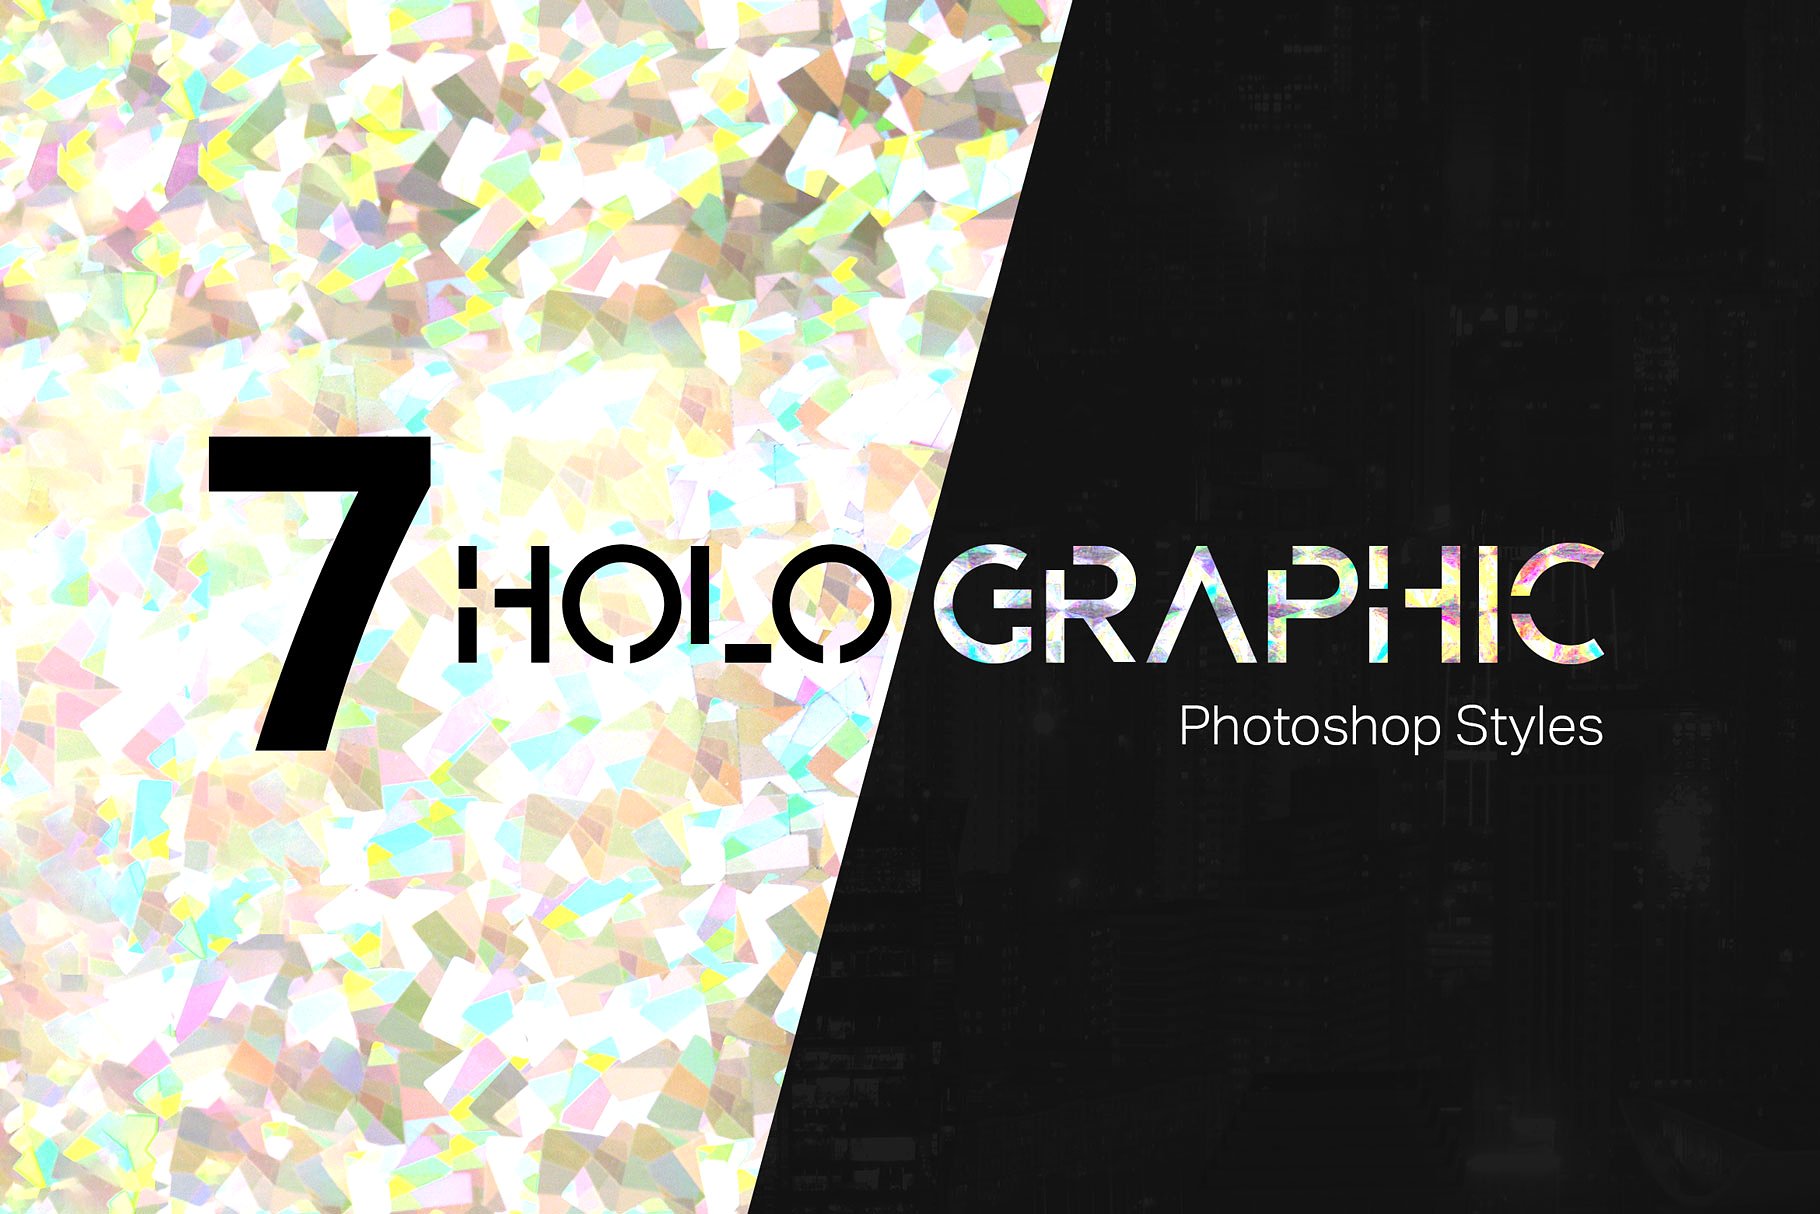 7款全息纹理设计素材7 Holographic Photos